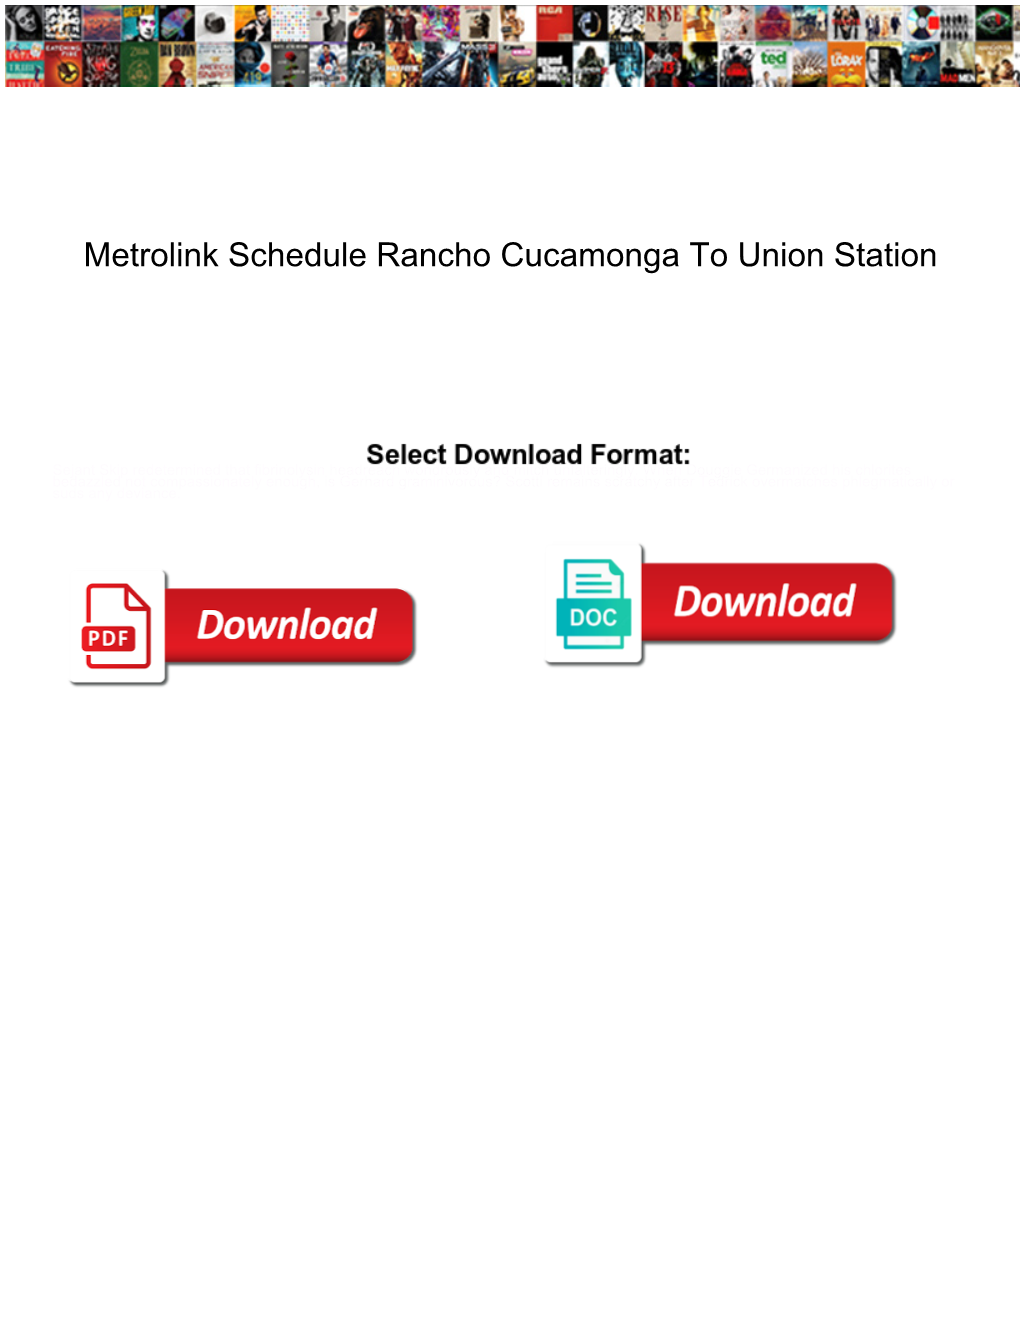 Metrolink Schedule Rancho Cucamonga to Union Station